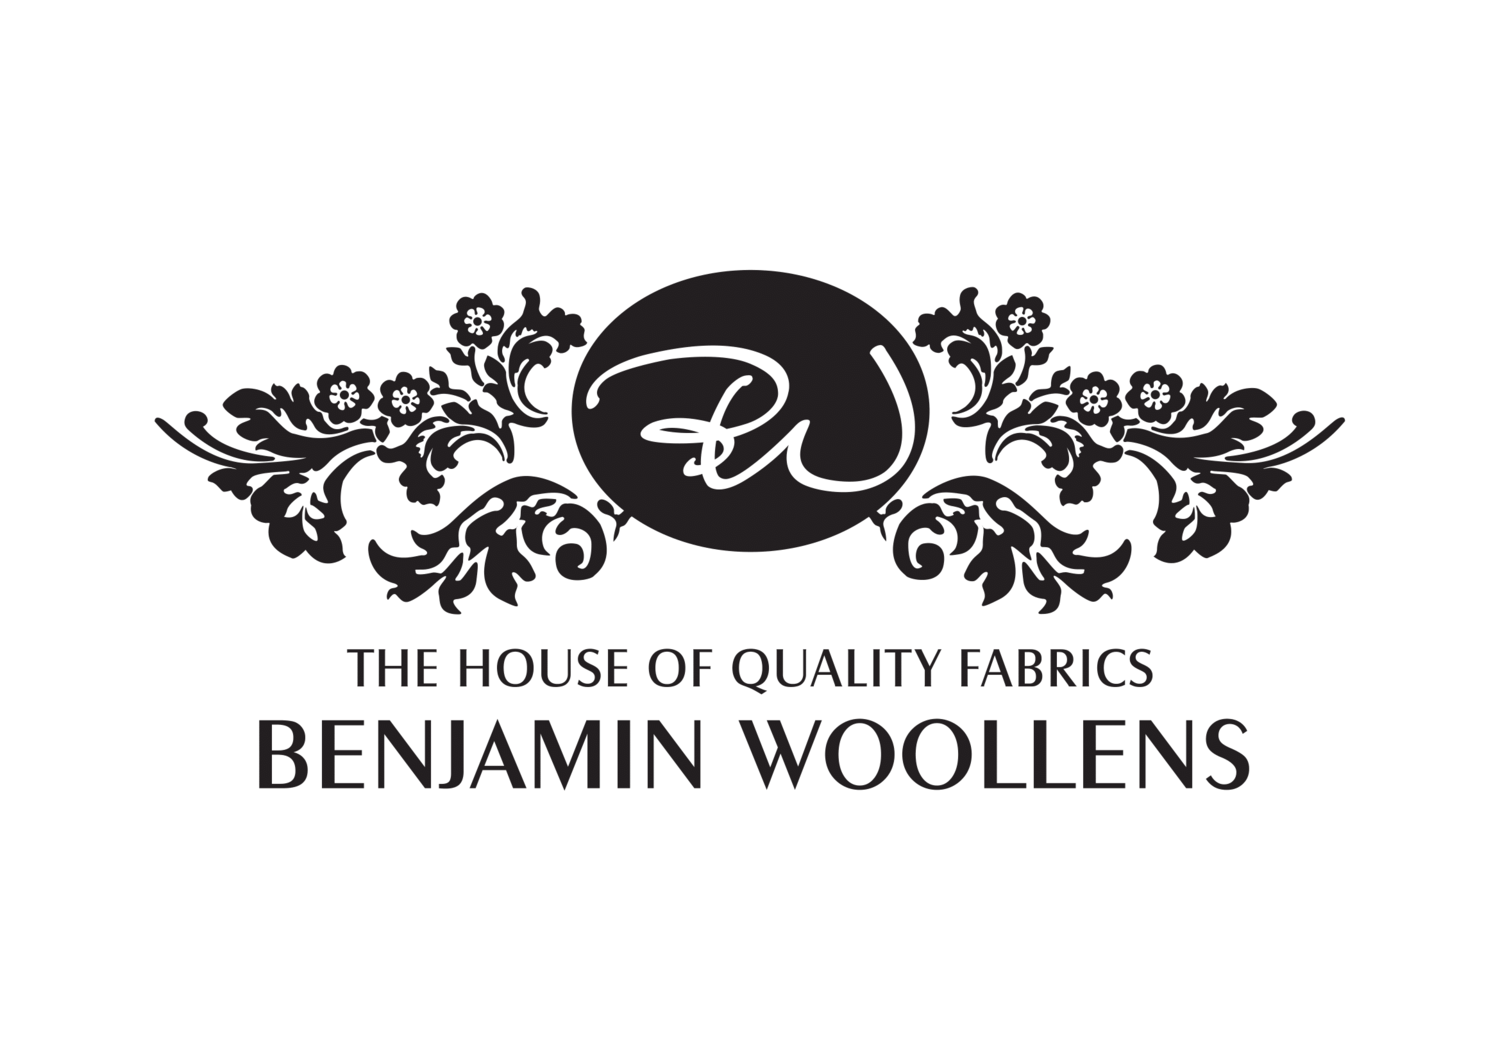 www.benjaminwoollensfabrics.co.za